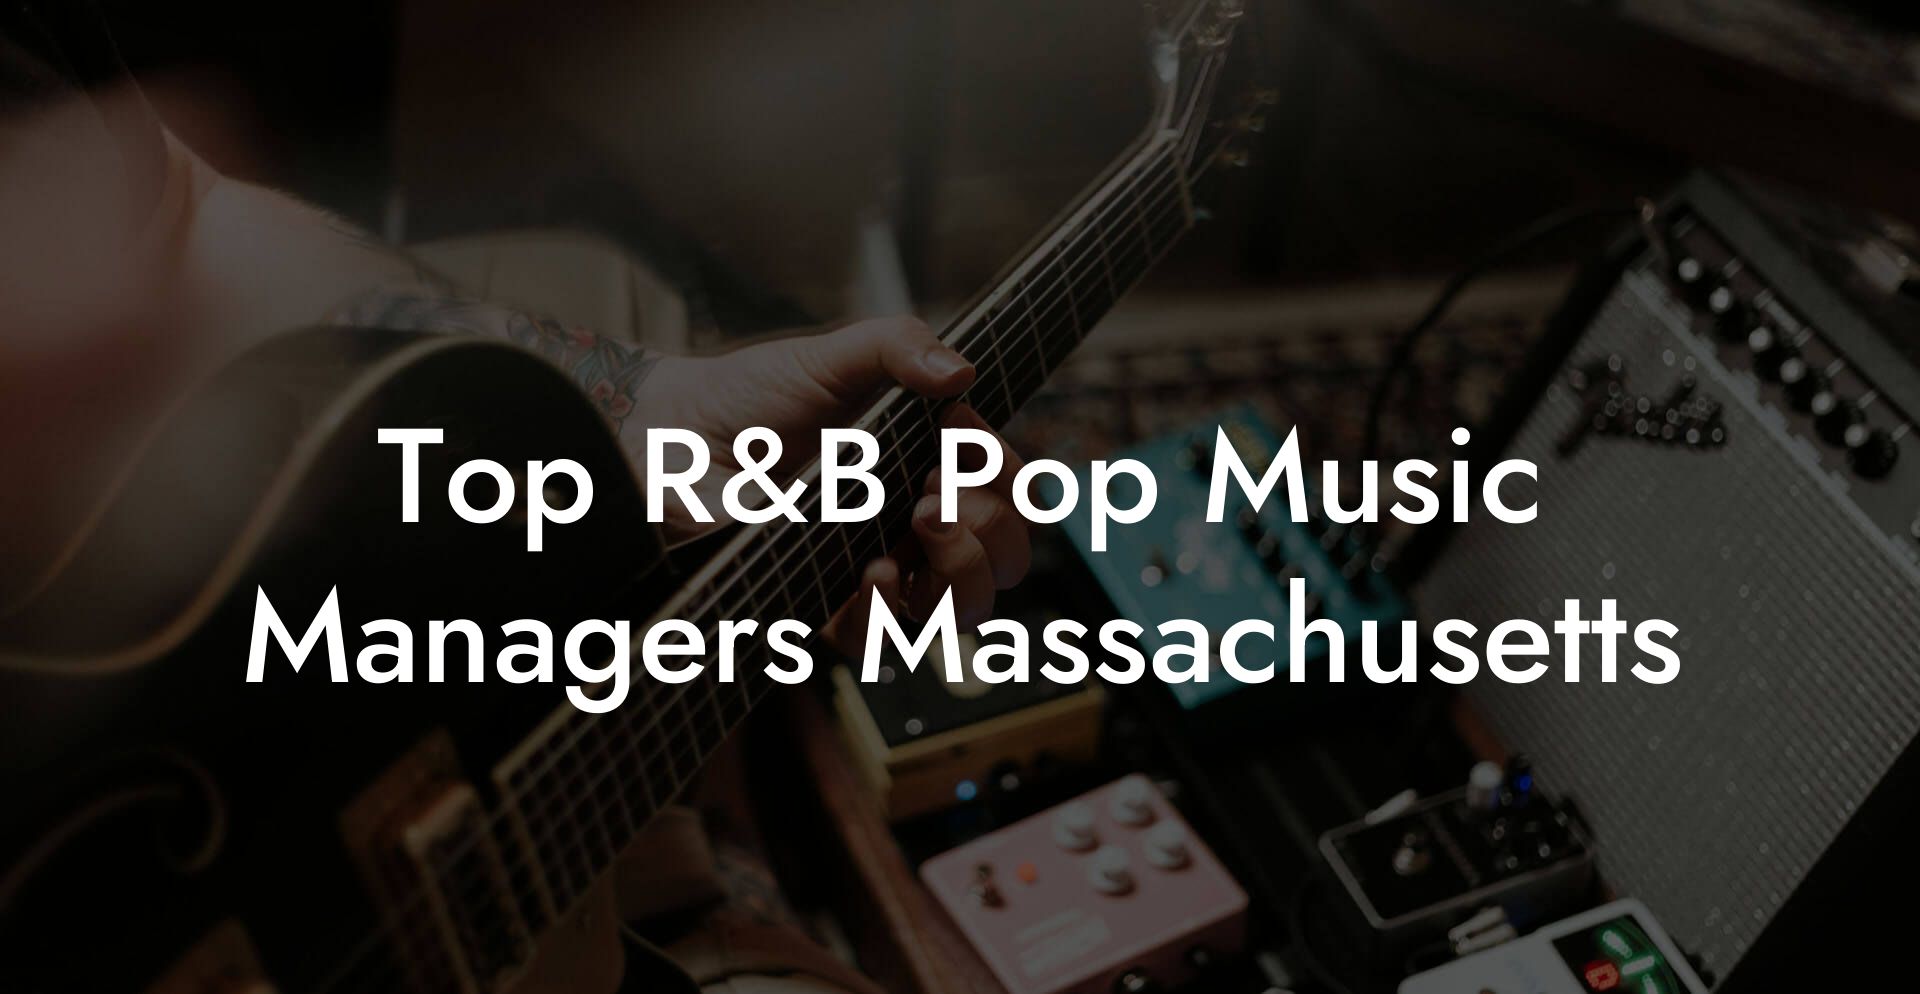 Top R&B Pop Music Managers Massachusetts